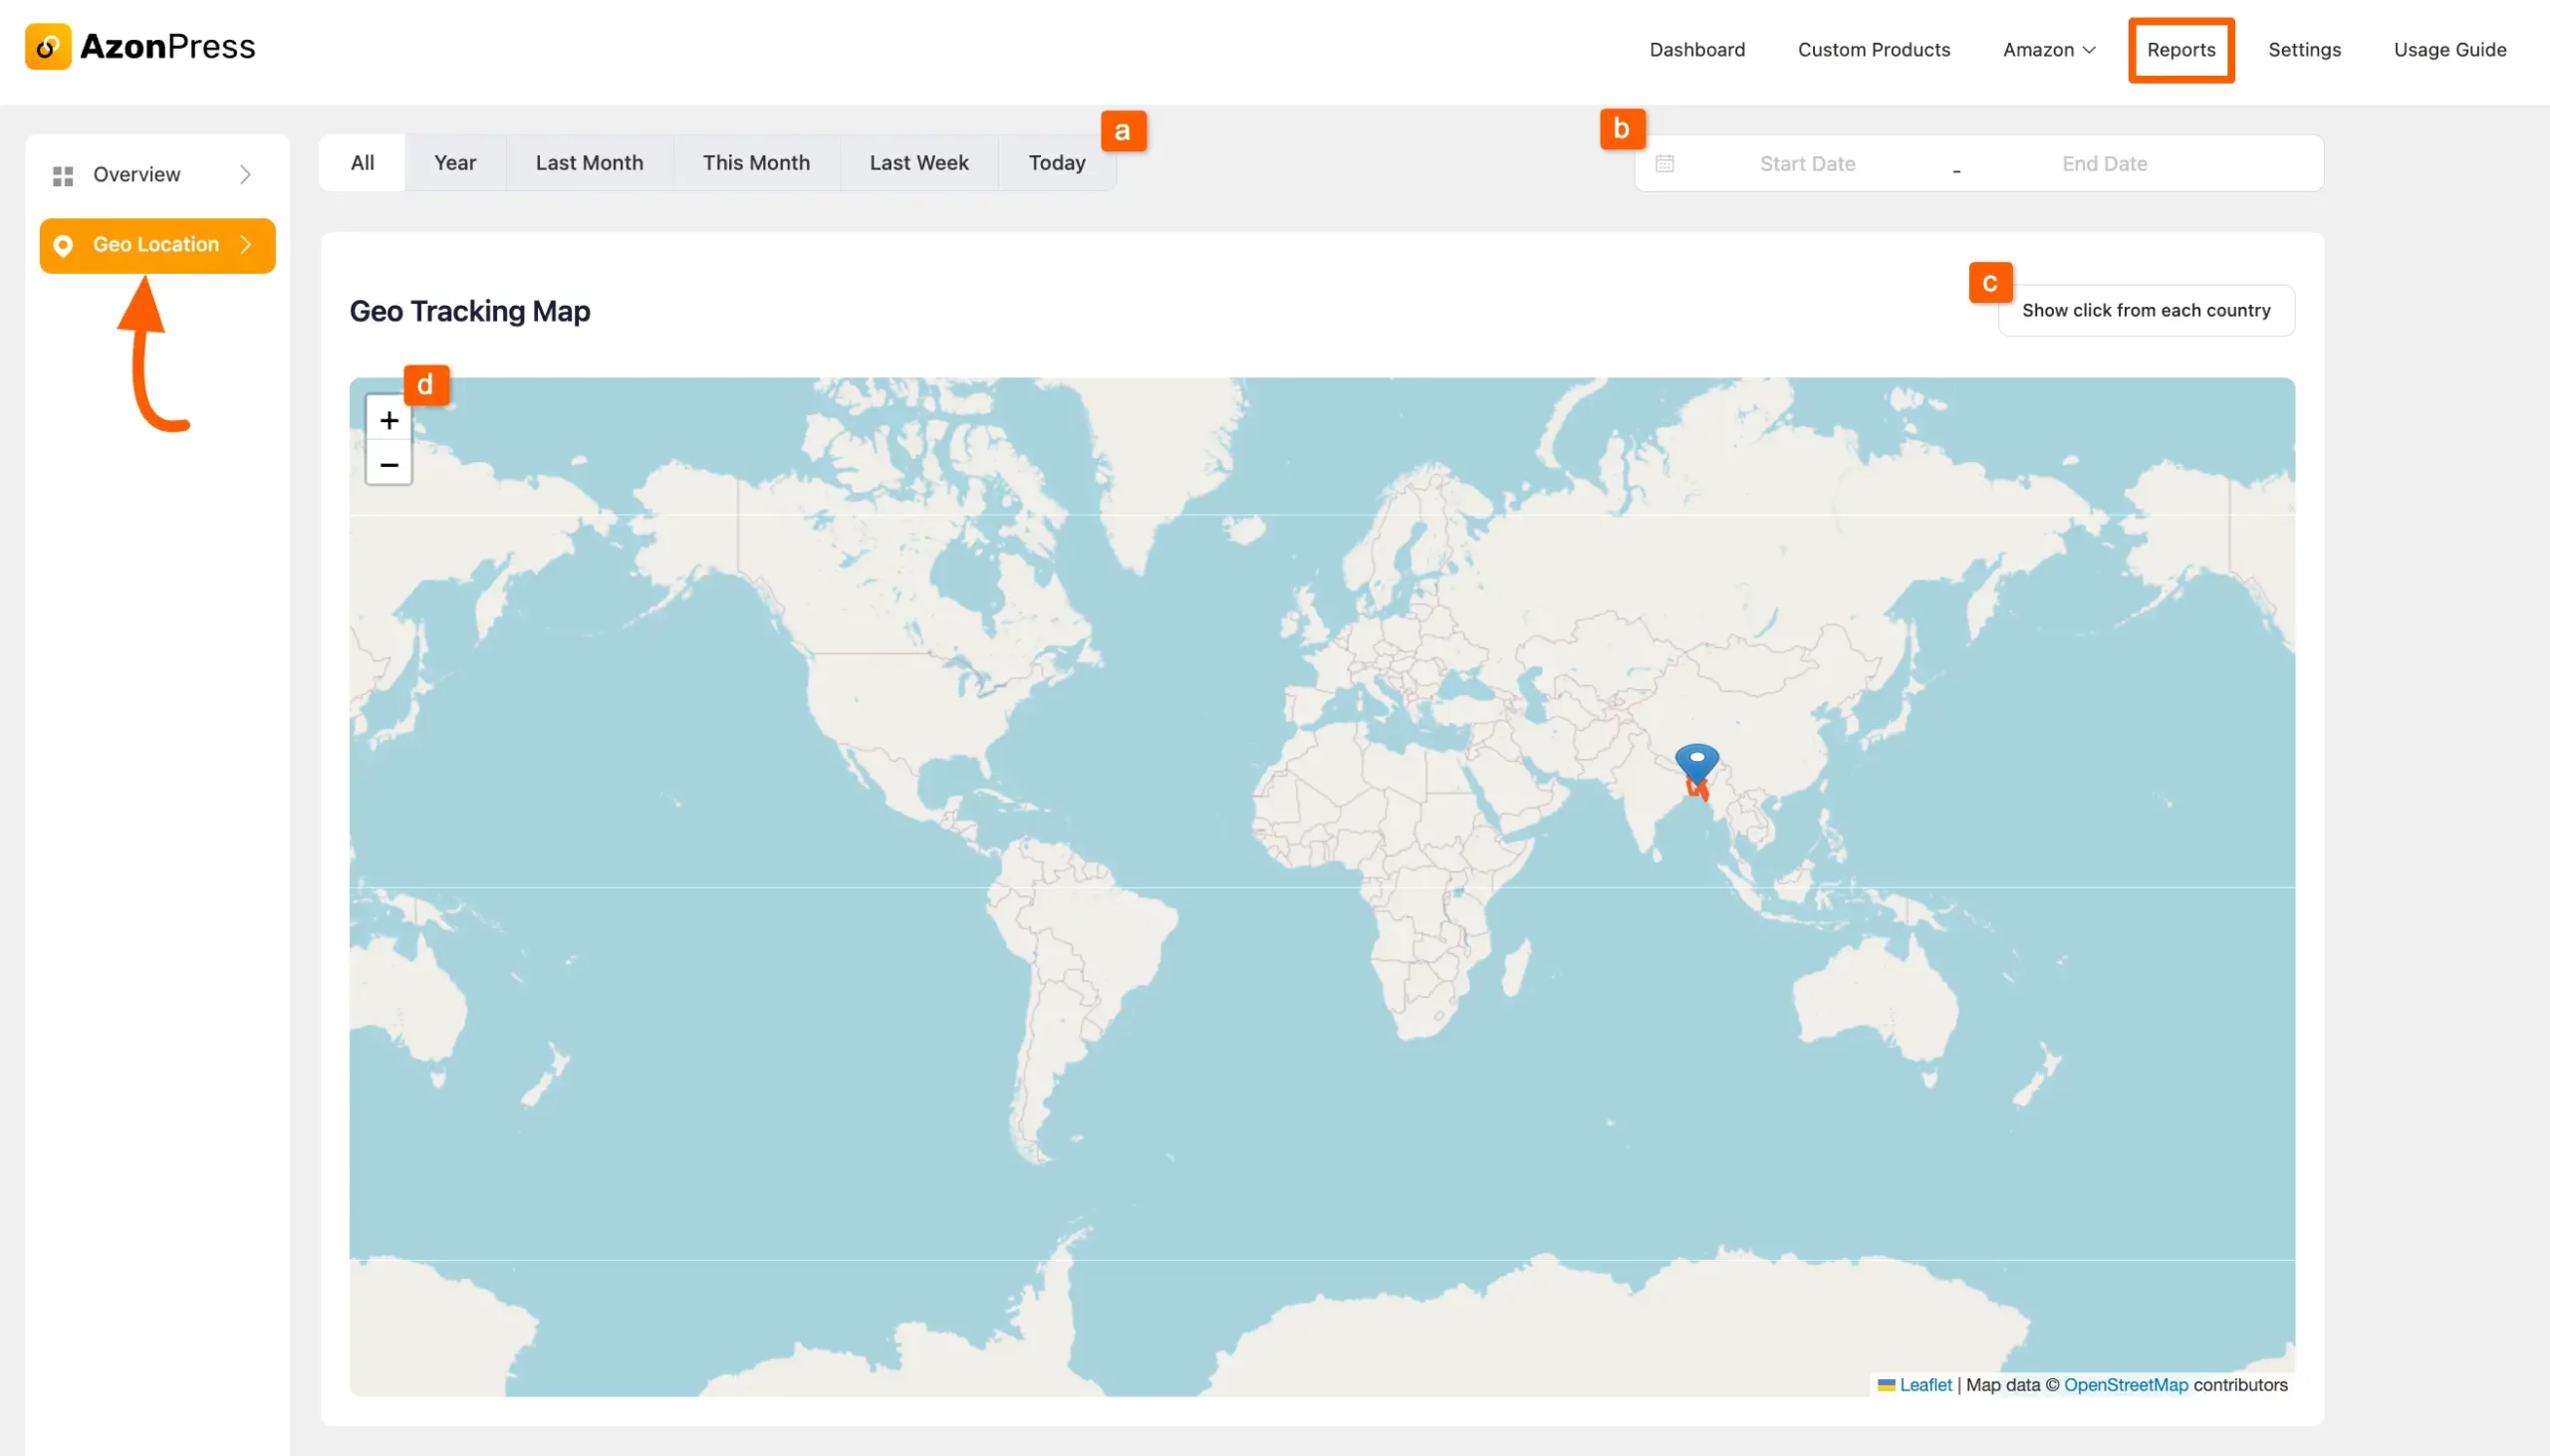 Geo-Tracking-Map-under-Geo-Location-from-AzonPress-dashboard